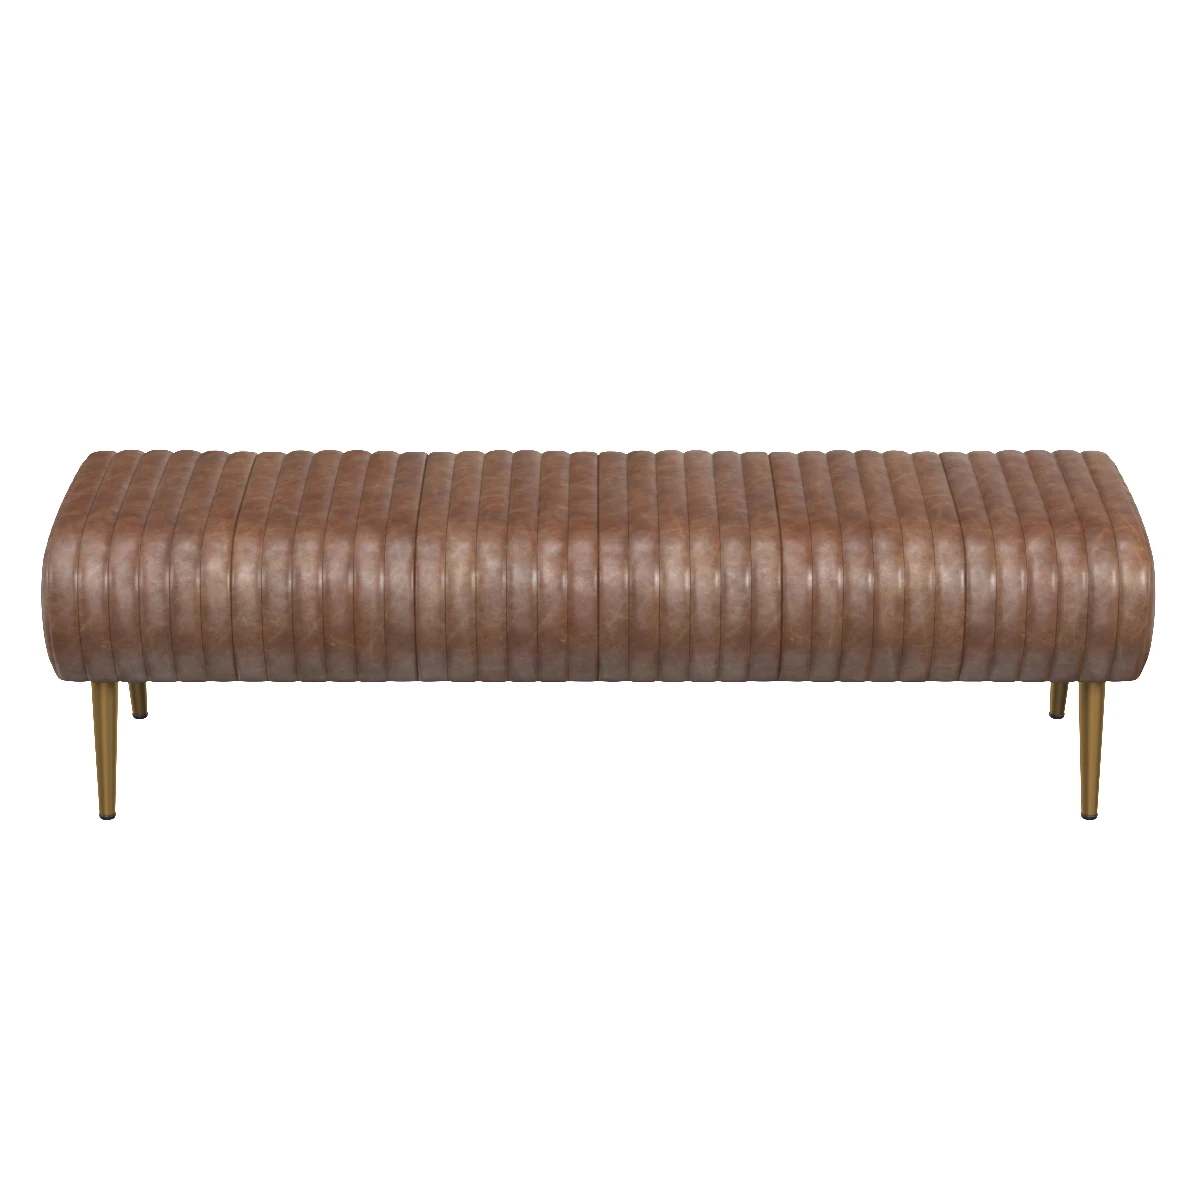 Endora Bench Open Road Brown Leather PK-1105-14 3D Model_06